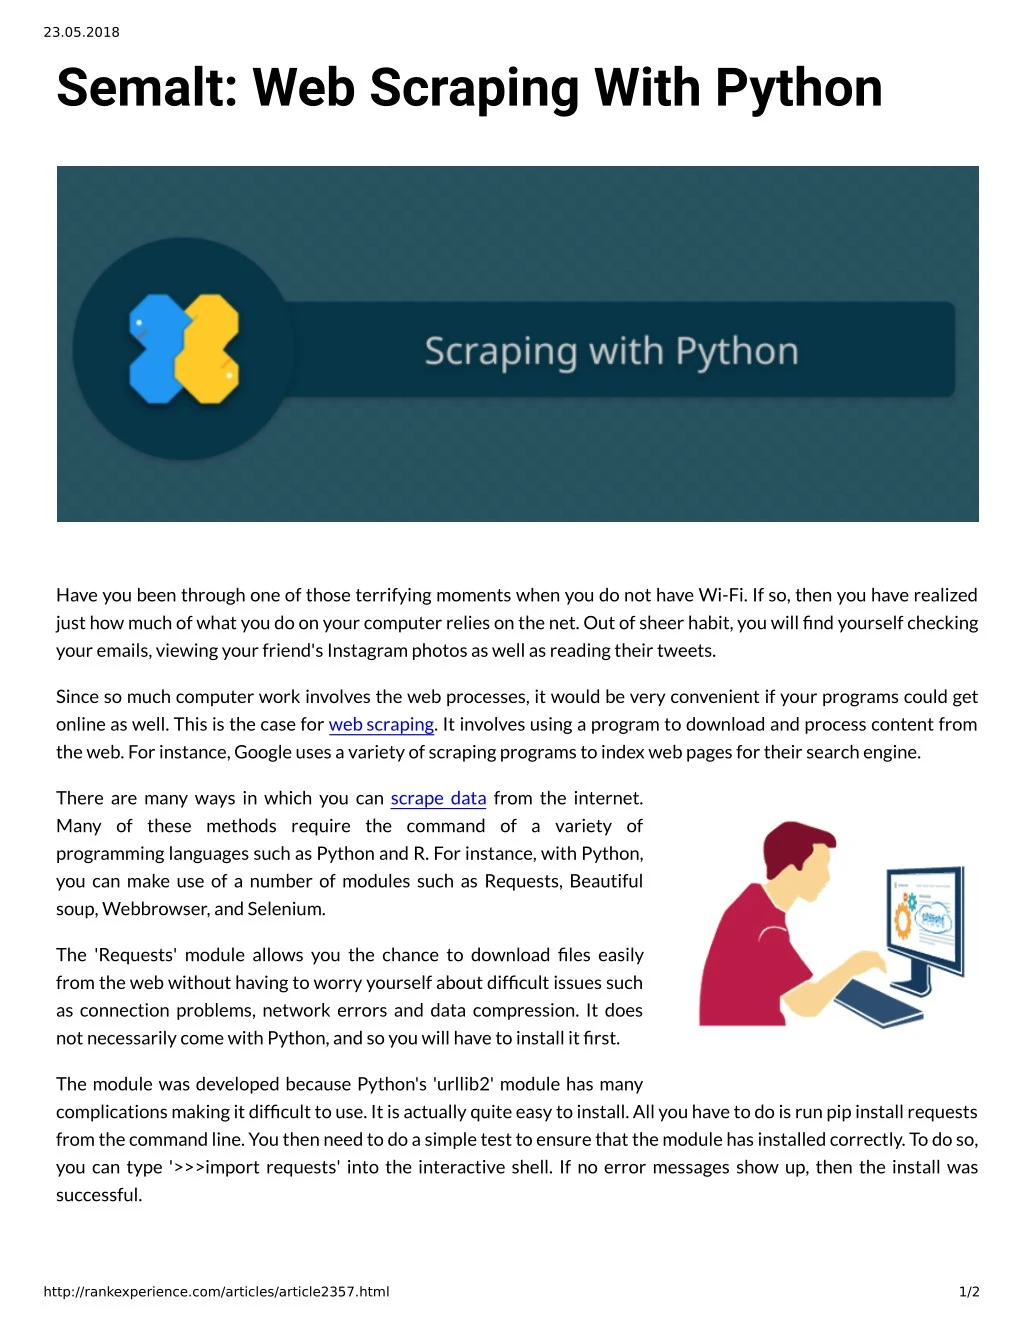 23 05 2018 semalt web scraping with python